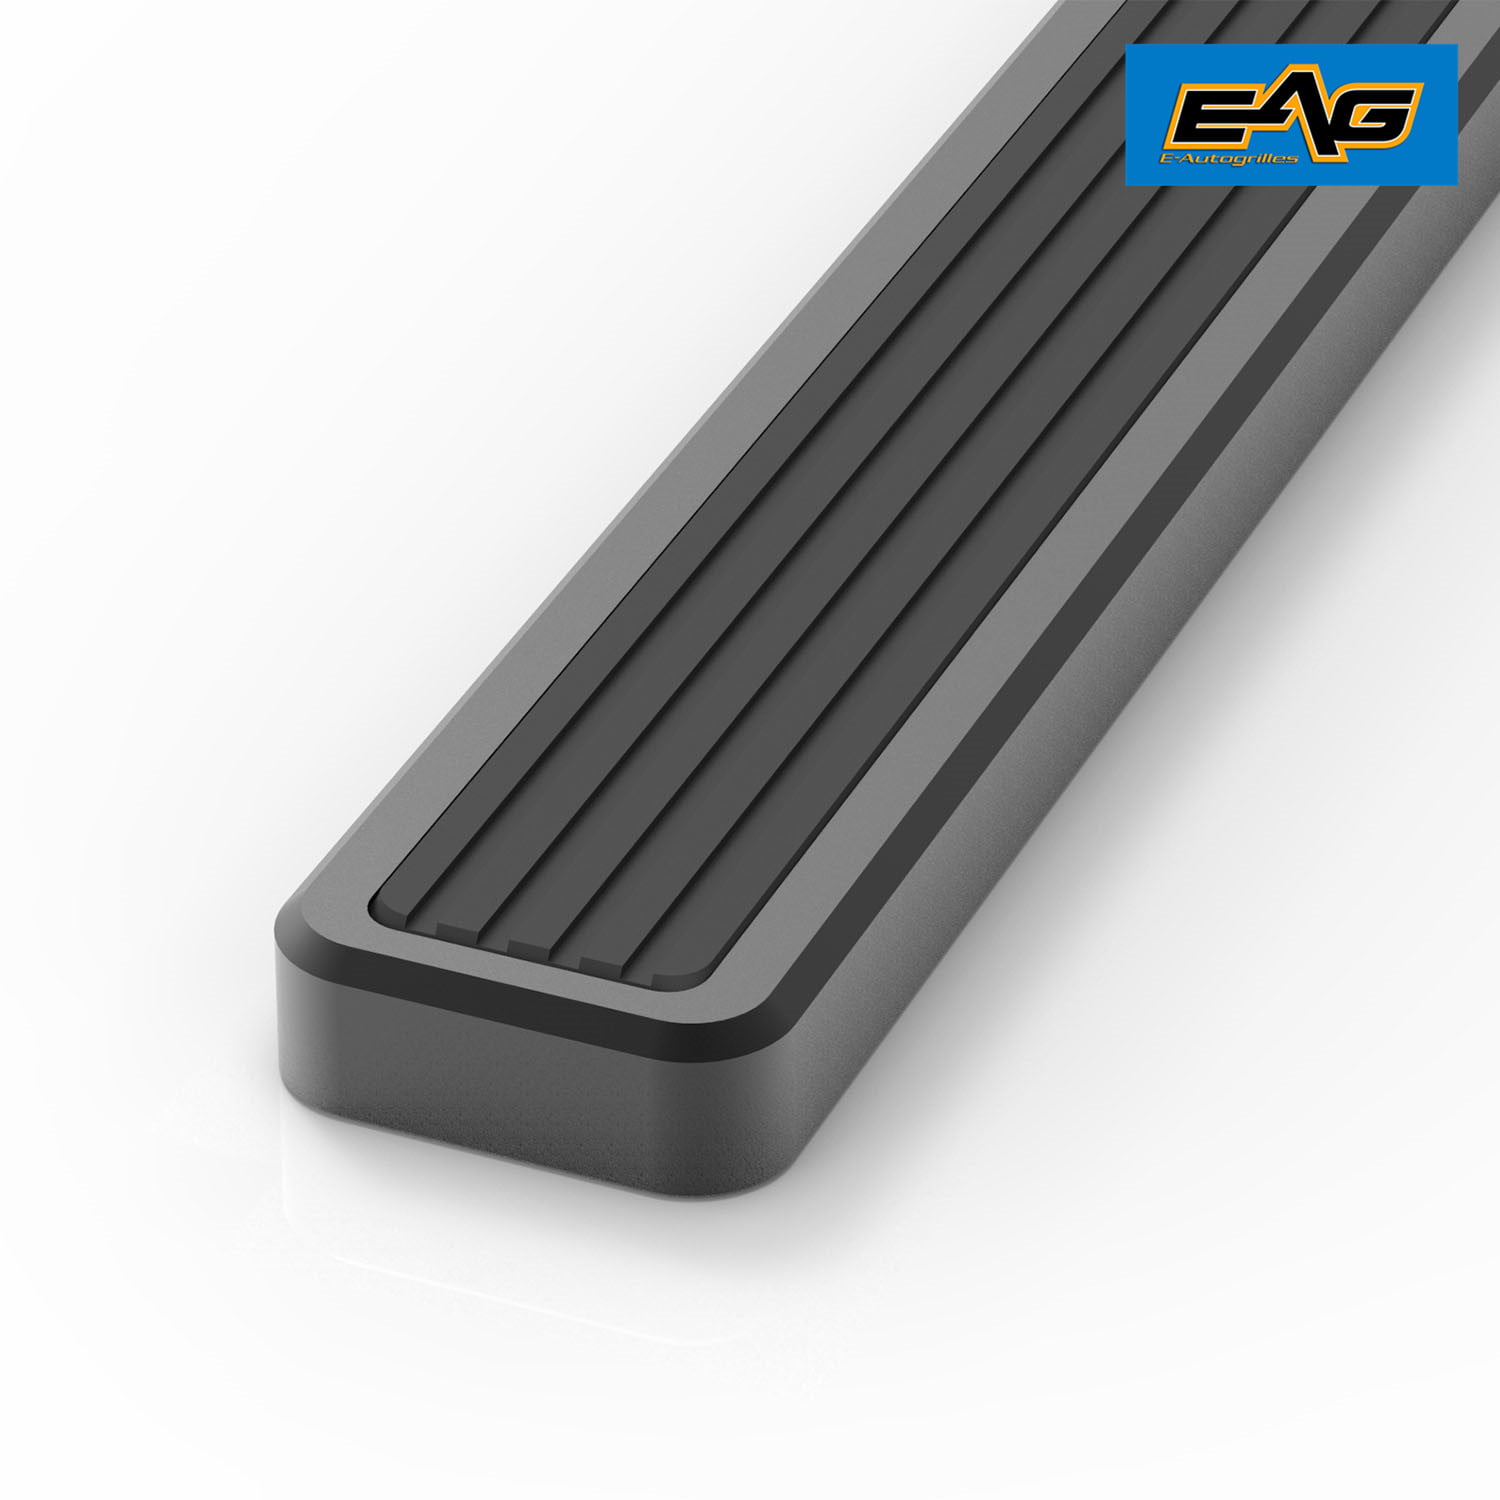 EAG Aluminum Running Board 4" Compatible with 99-15 Silverado 2500/3500 Crew Cab